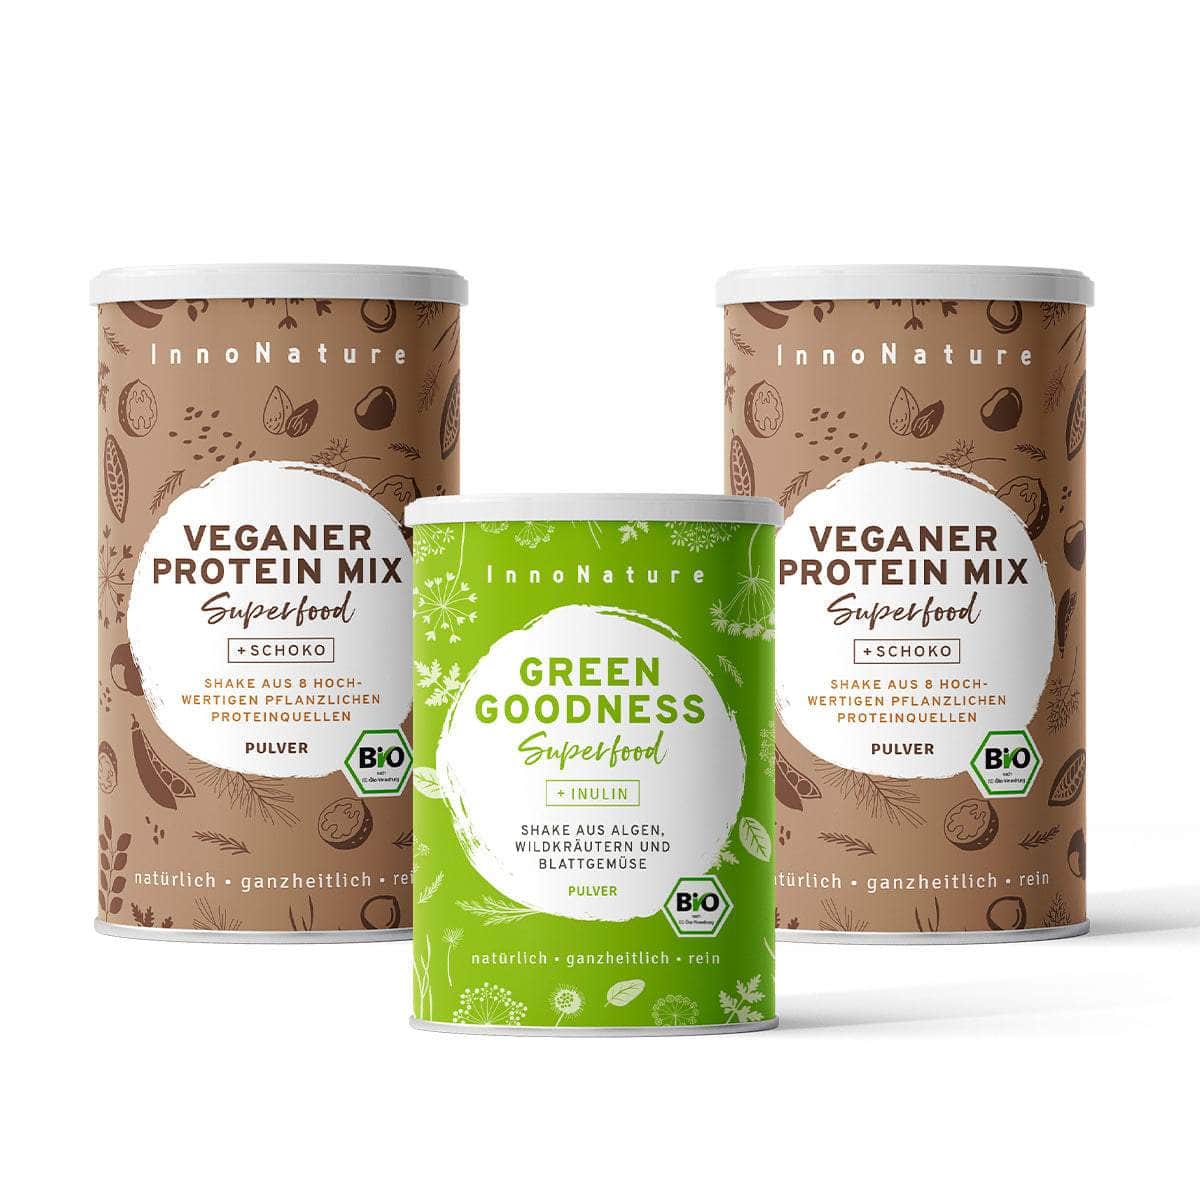 InnoNature Pakete 2x Veganer Protein Mix Schoko; 1x Green Goodness mutimbauch-Shake-Paket: Wähle Deine Lieblingskombi